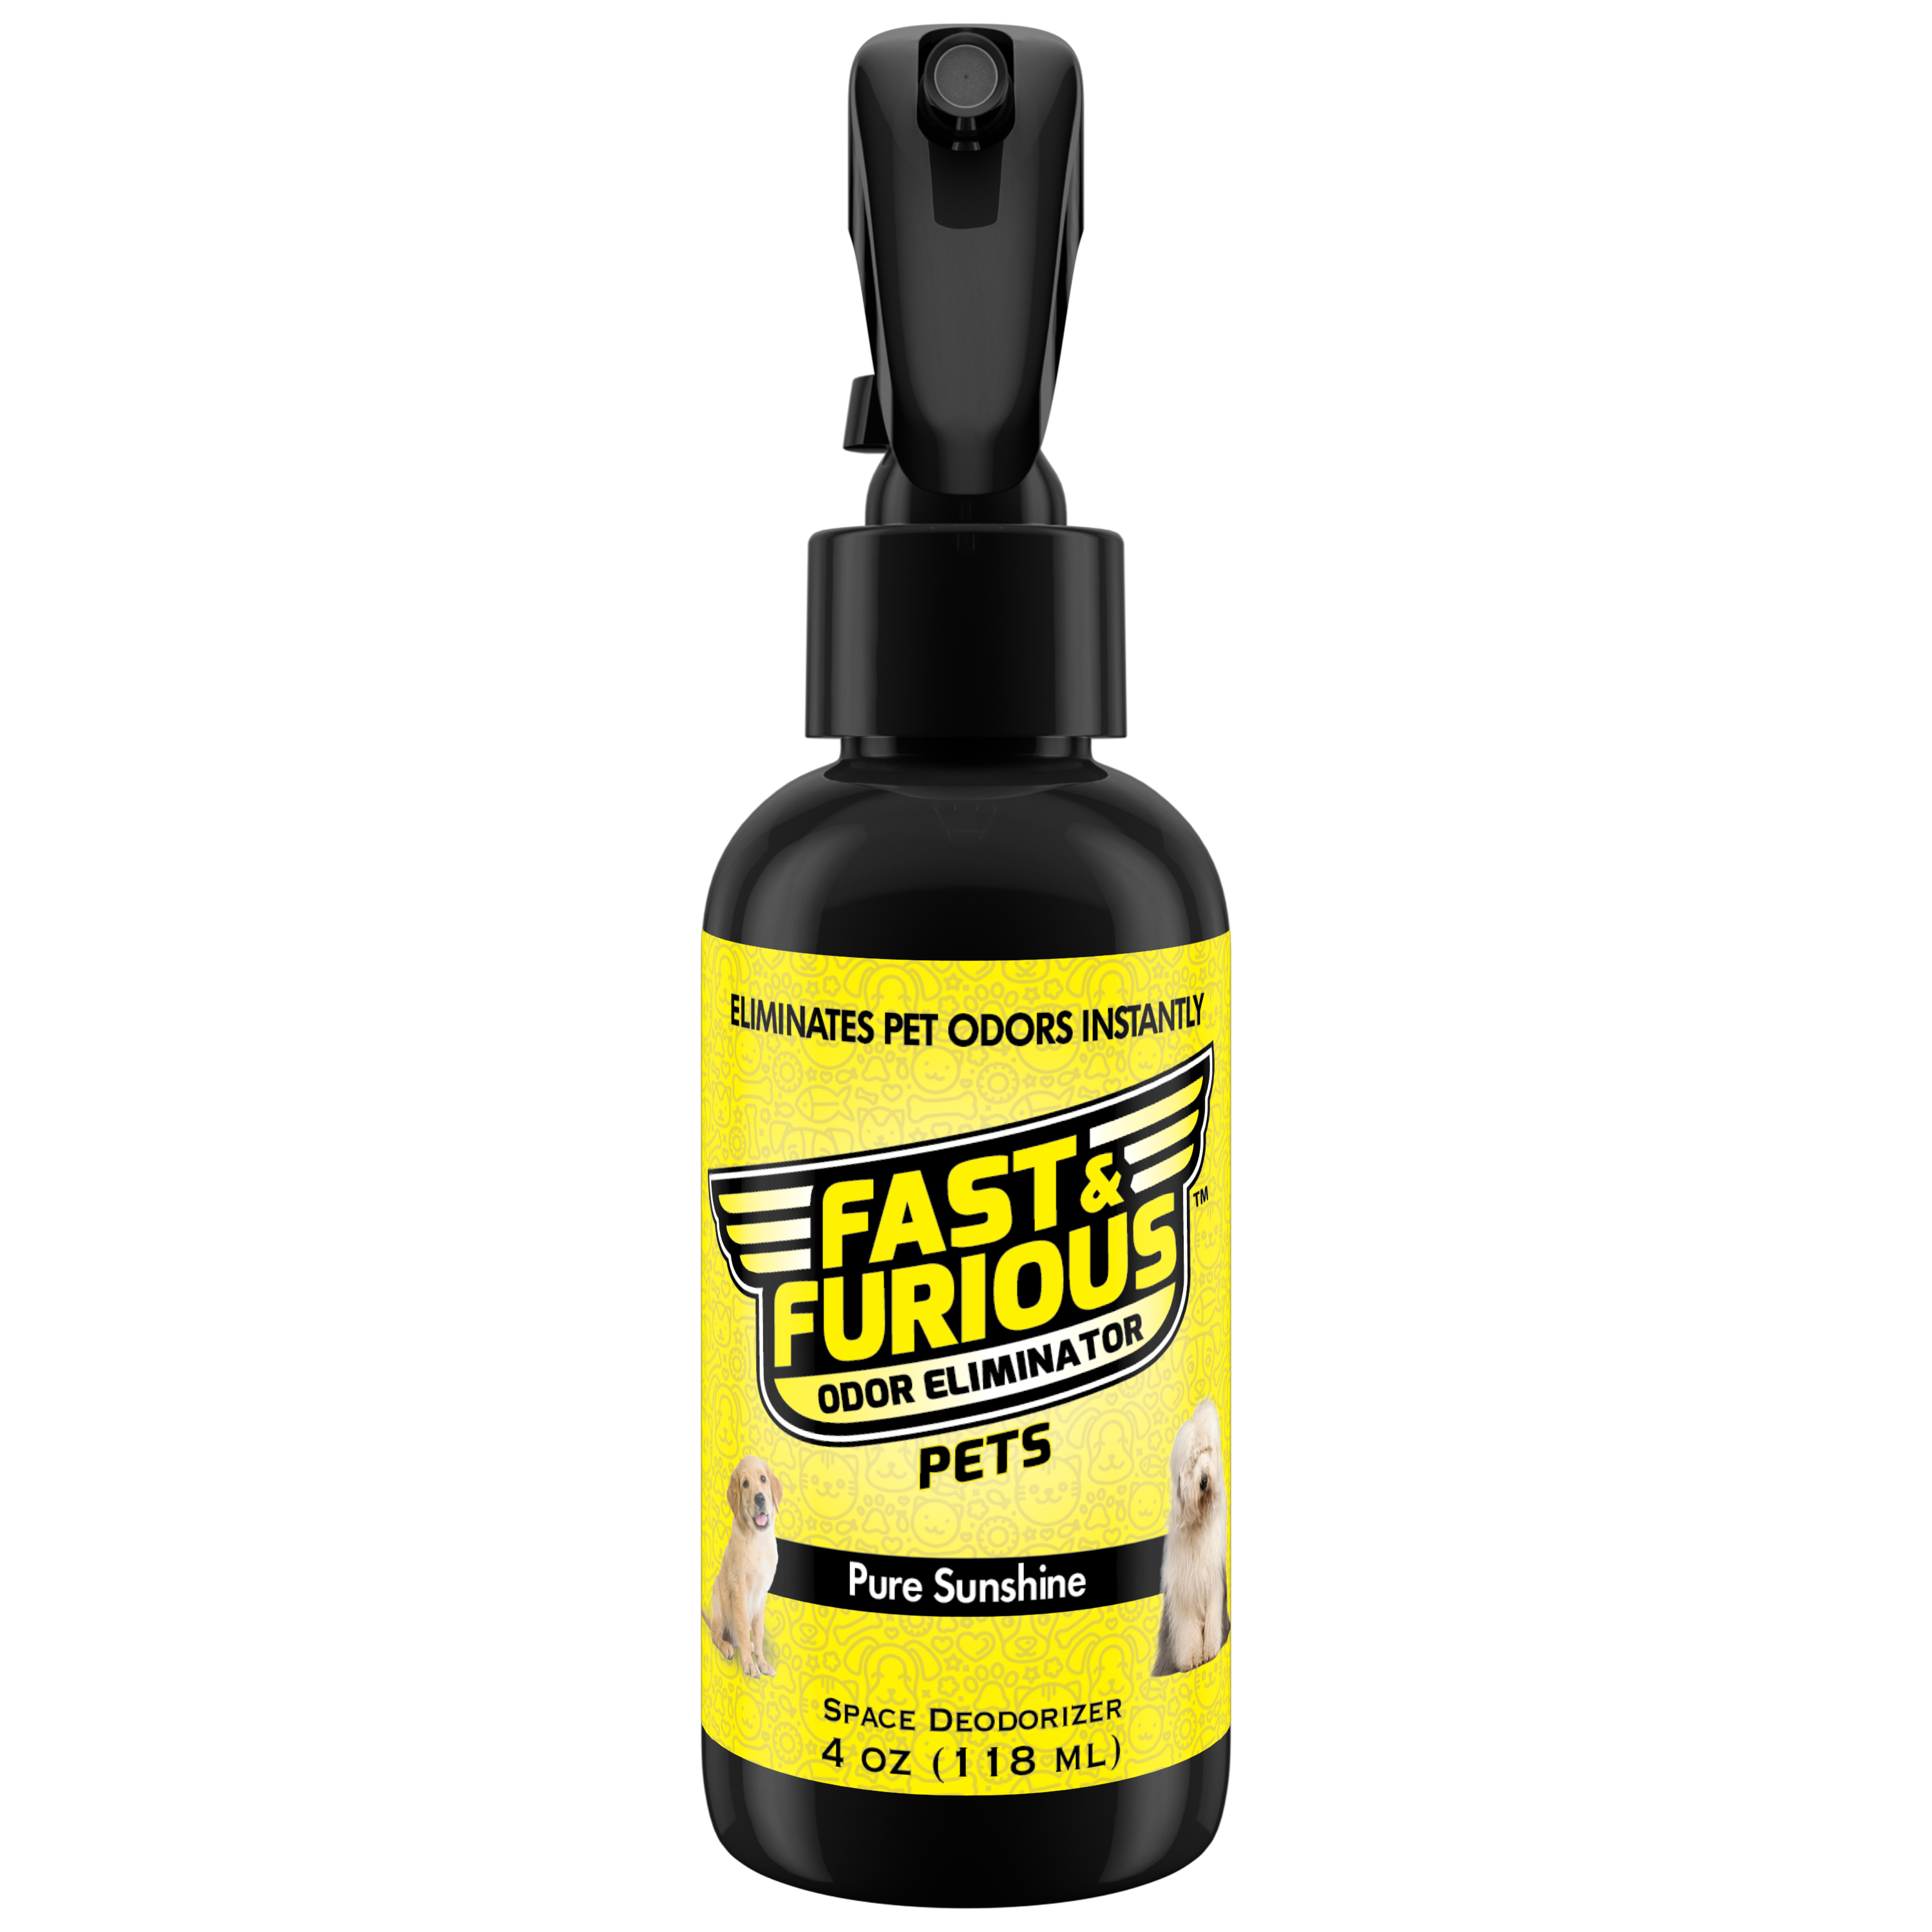 Fast and Furious Pets Odor Eliminator - Pure Sunshine Scent